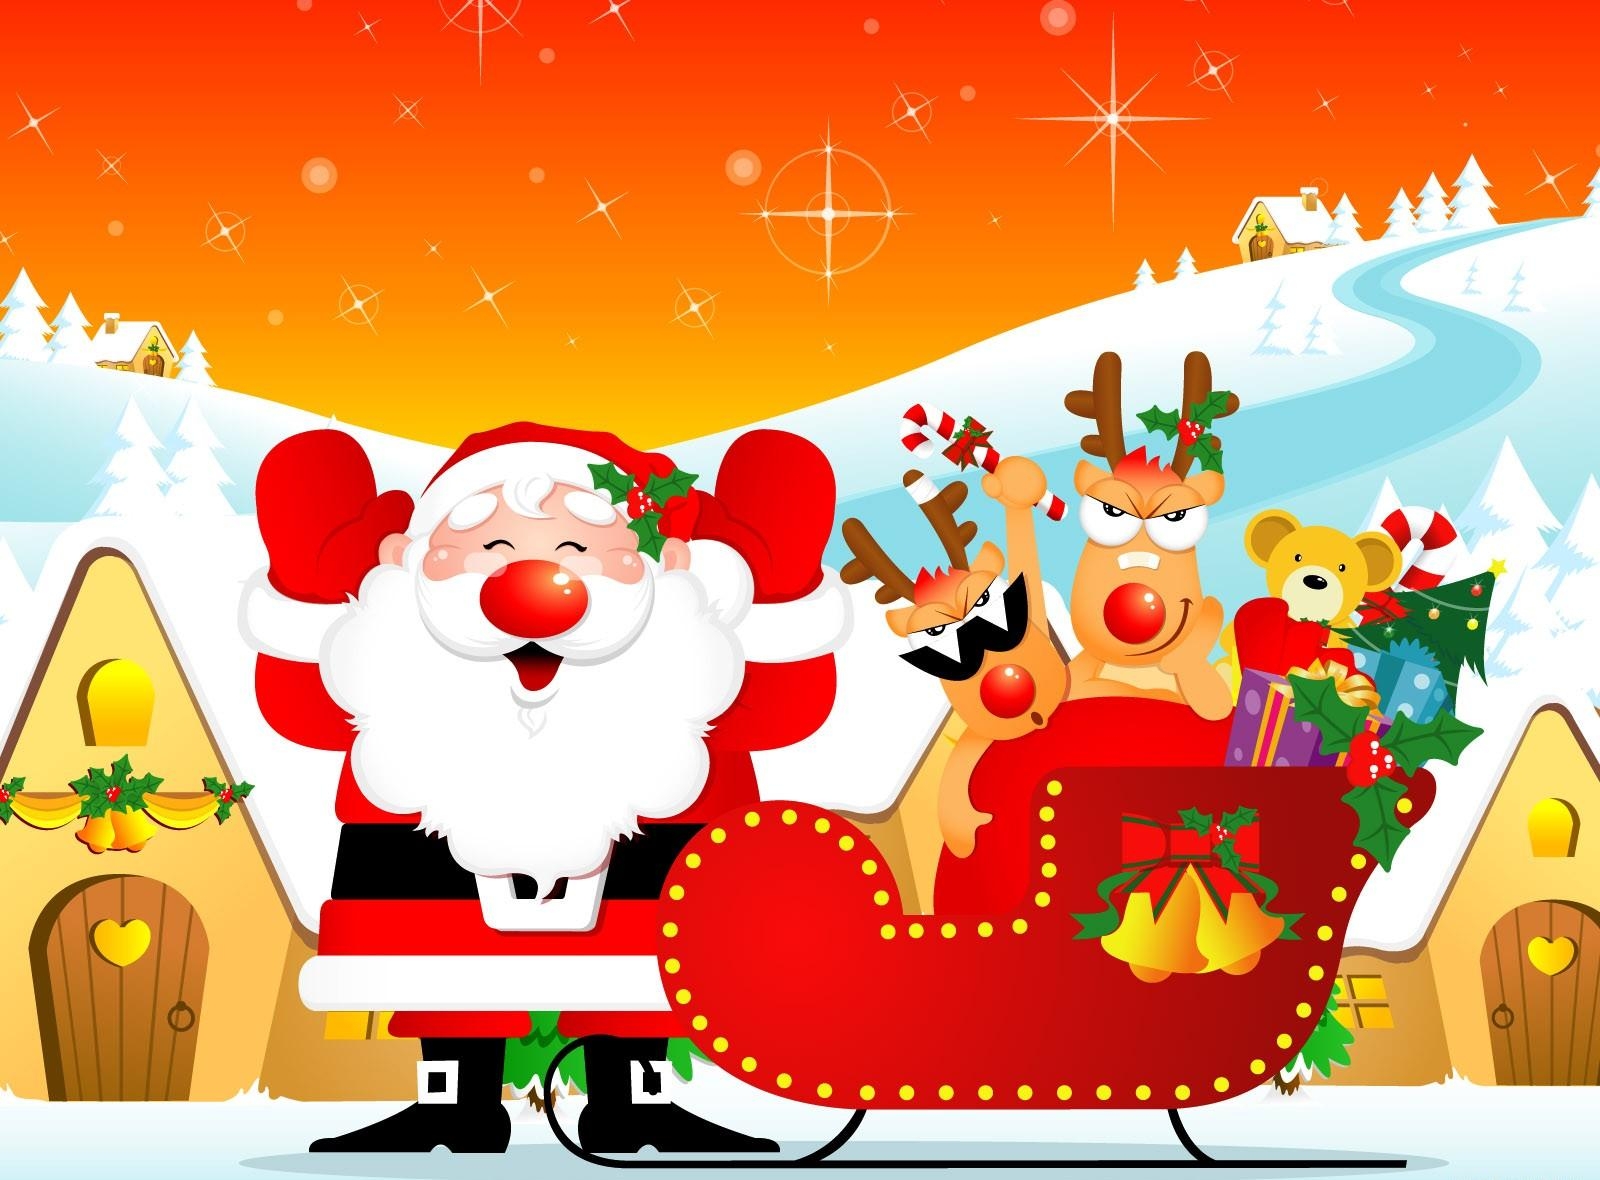 holidays, houses, santa claus, deers, christmas, holiday, sleigh, sledge, presents, gifts